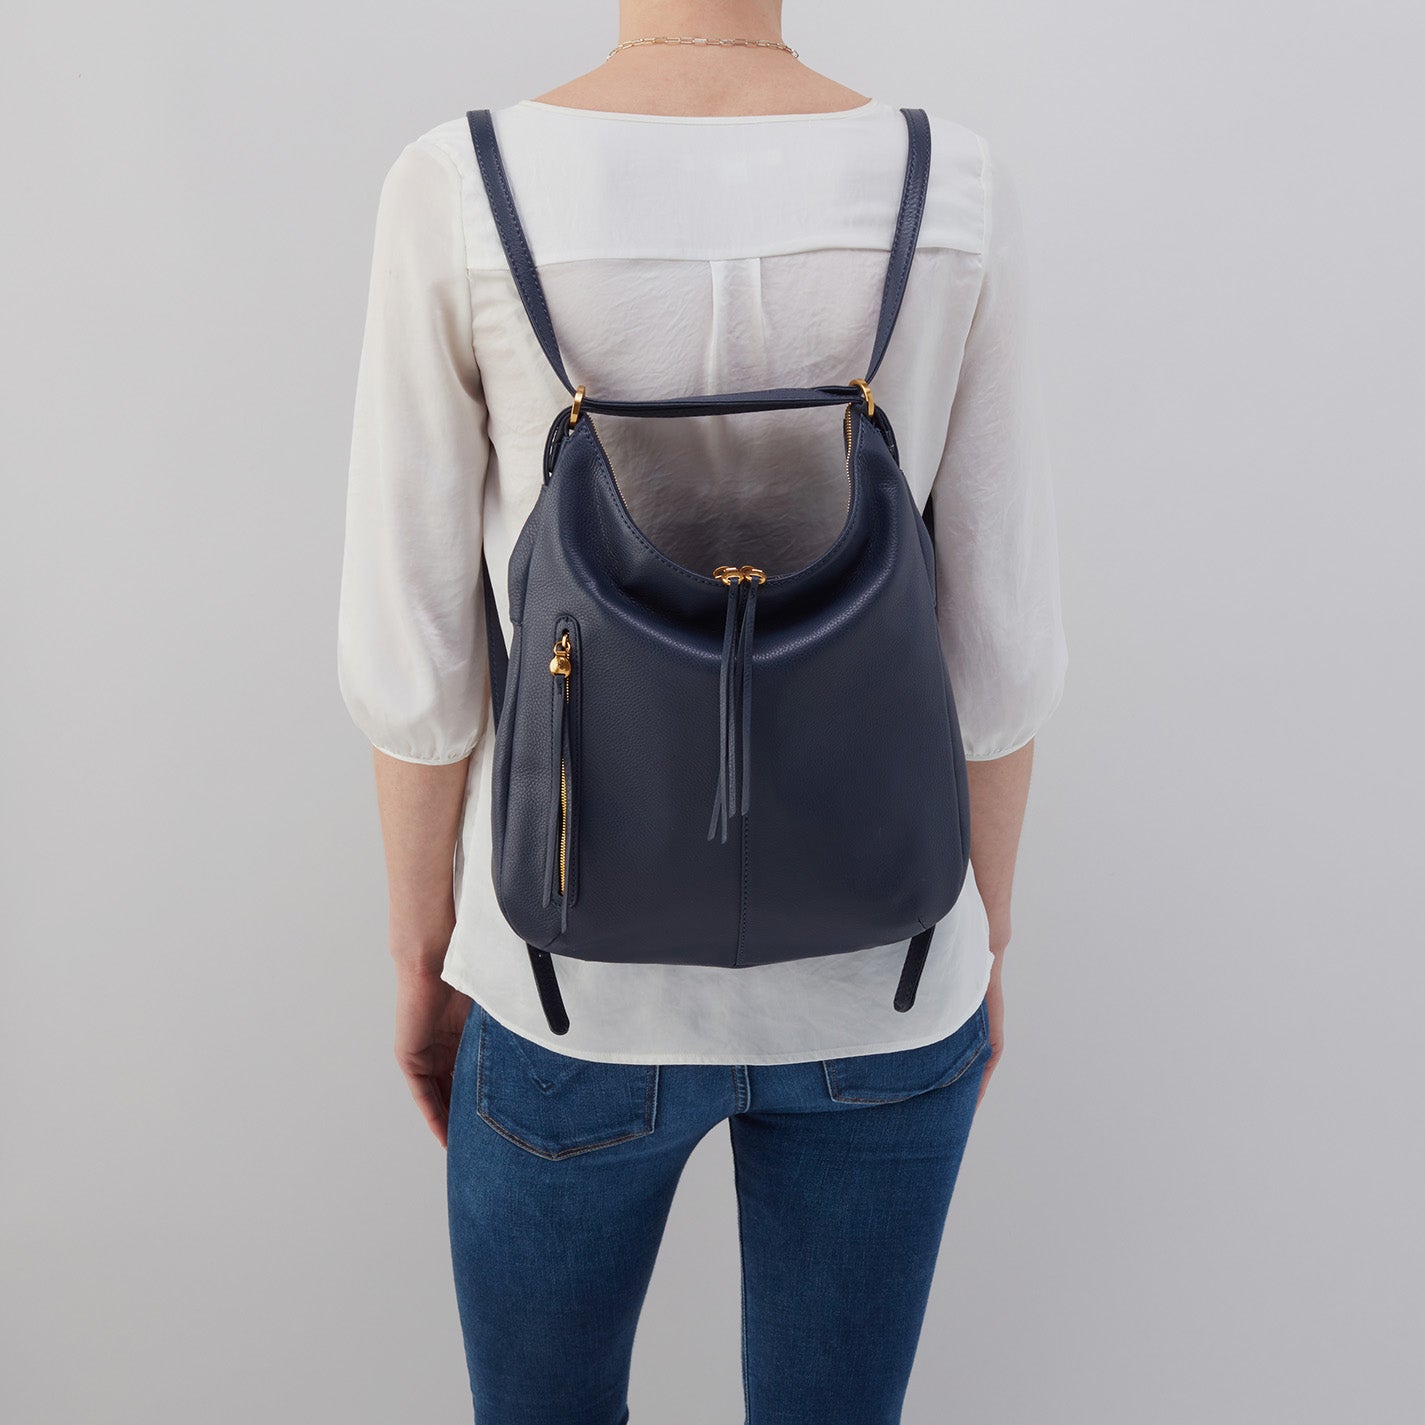 Convertible backpack/ handbag | Handbag backpack, Handbag, Convertible  backpack